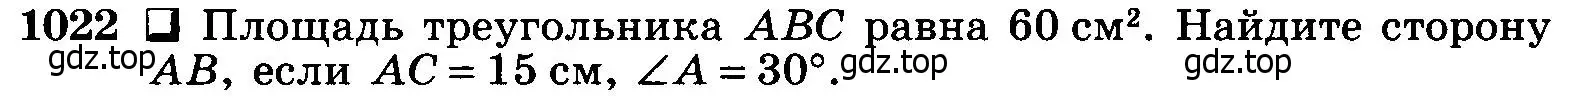 Условие номер 1022 (страница 257) гдз по геометрии 7-9 класс Атанасян, Бутузов, учебник